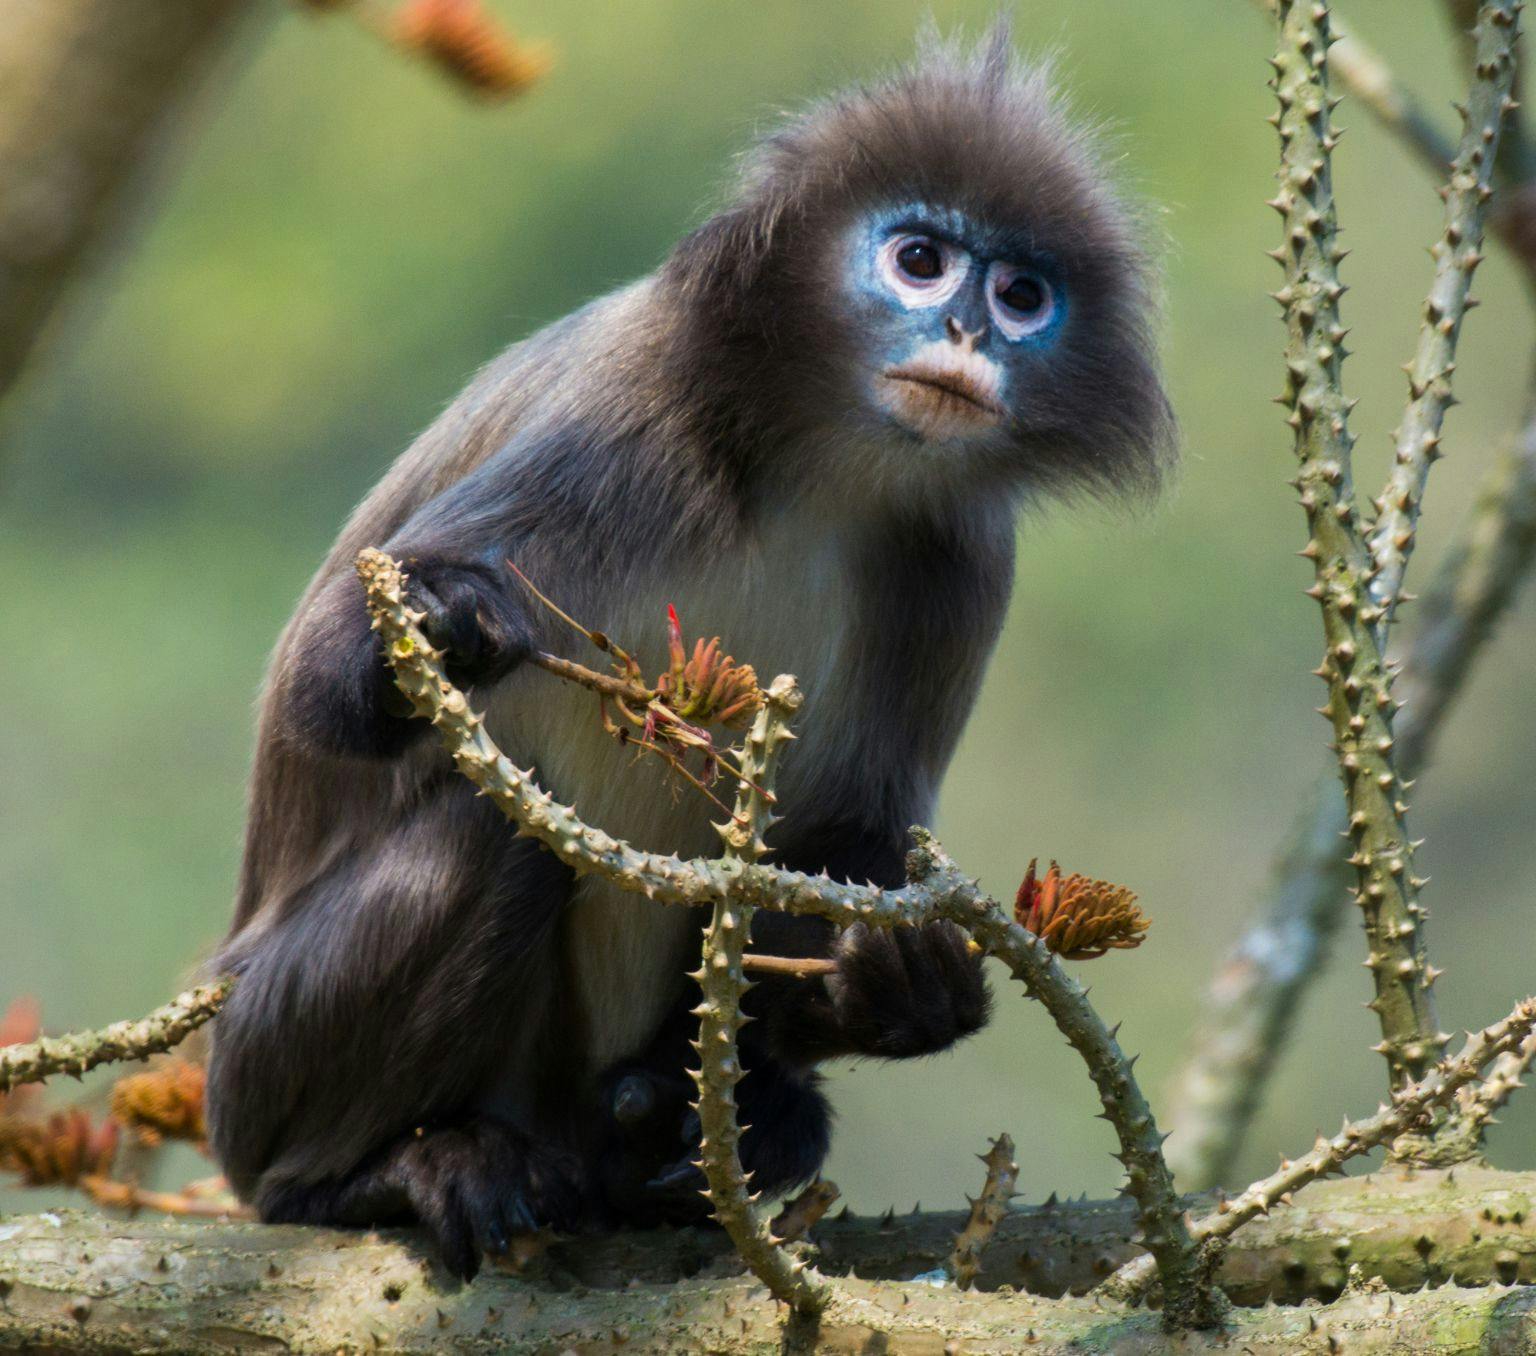 Phayre's monkey sitting amongst greenery.